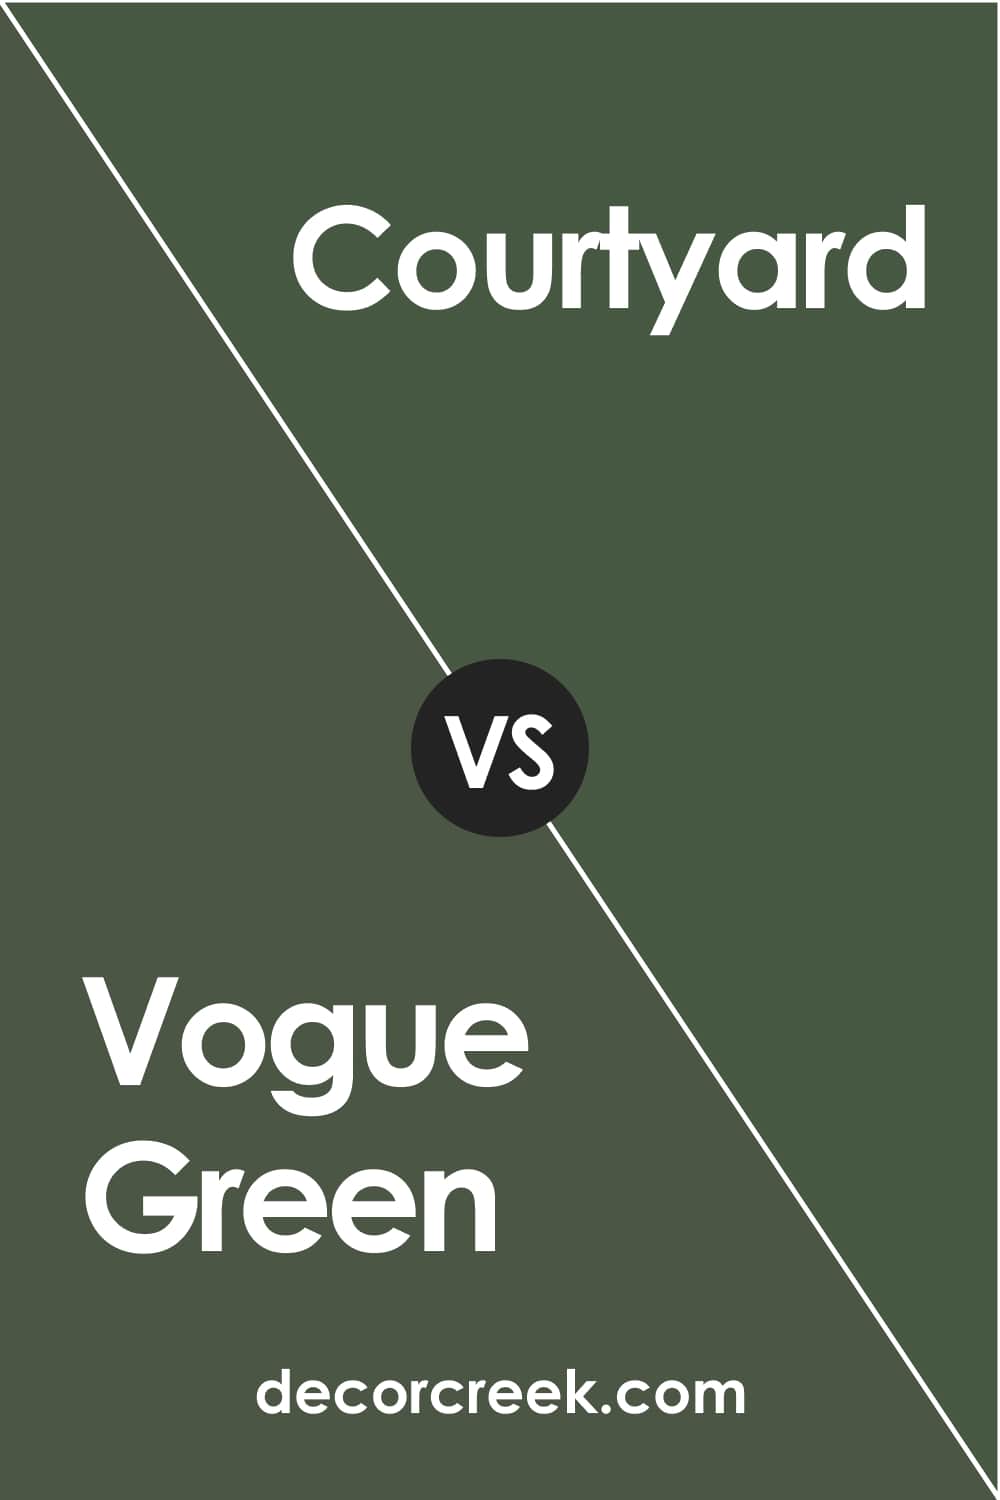 Vogue Green vs Courtyard